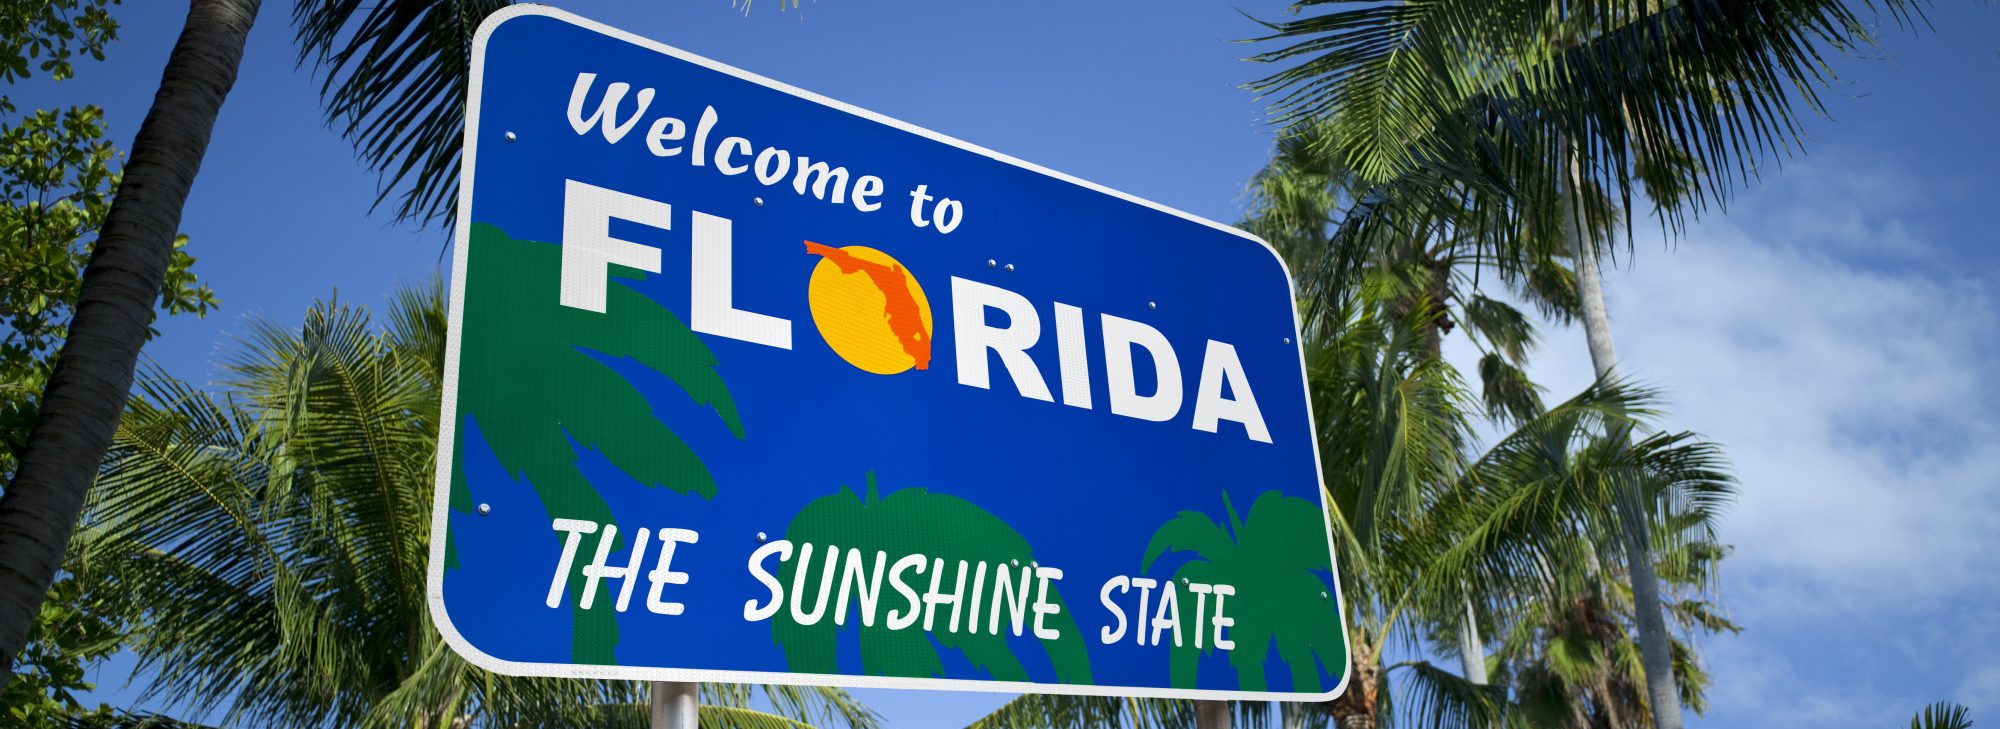 Florida 2019